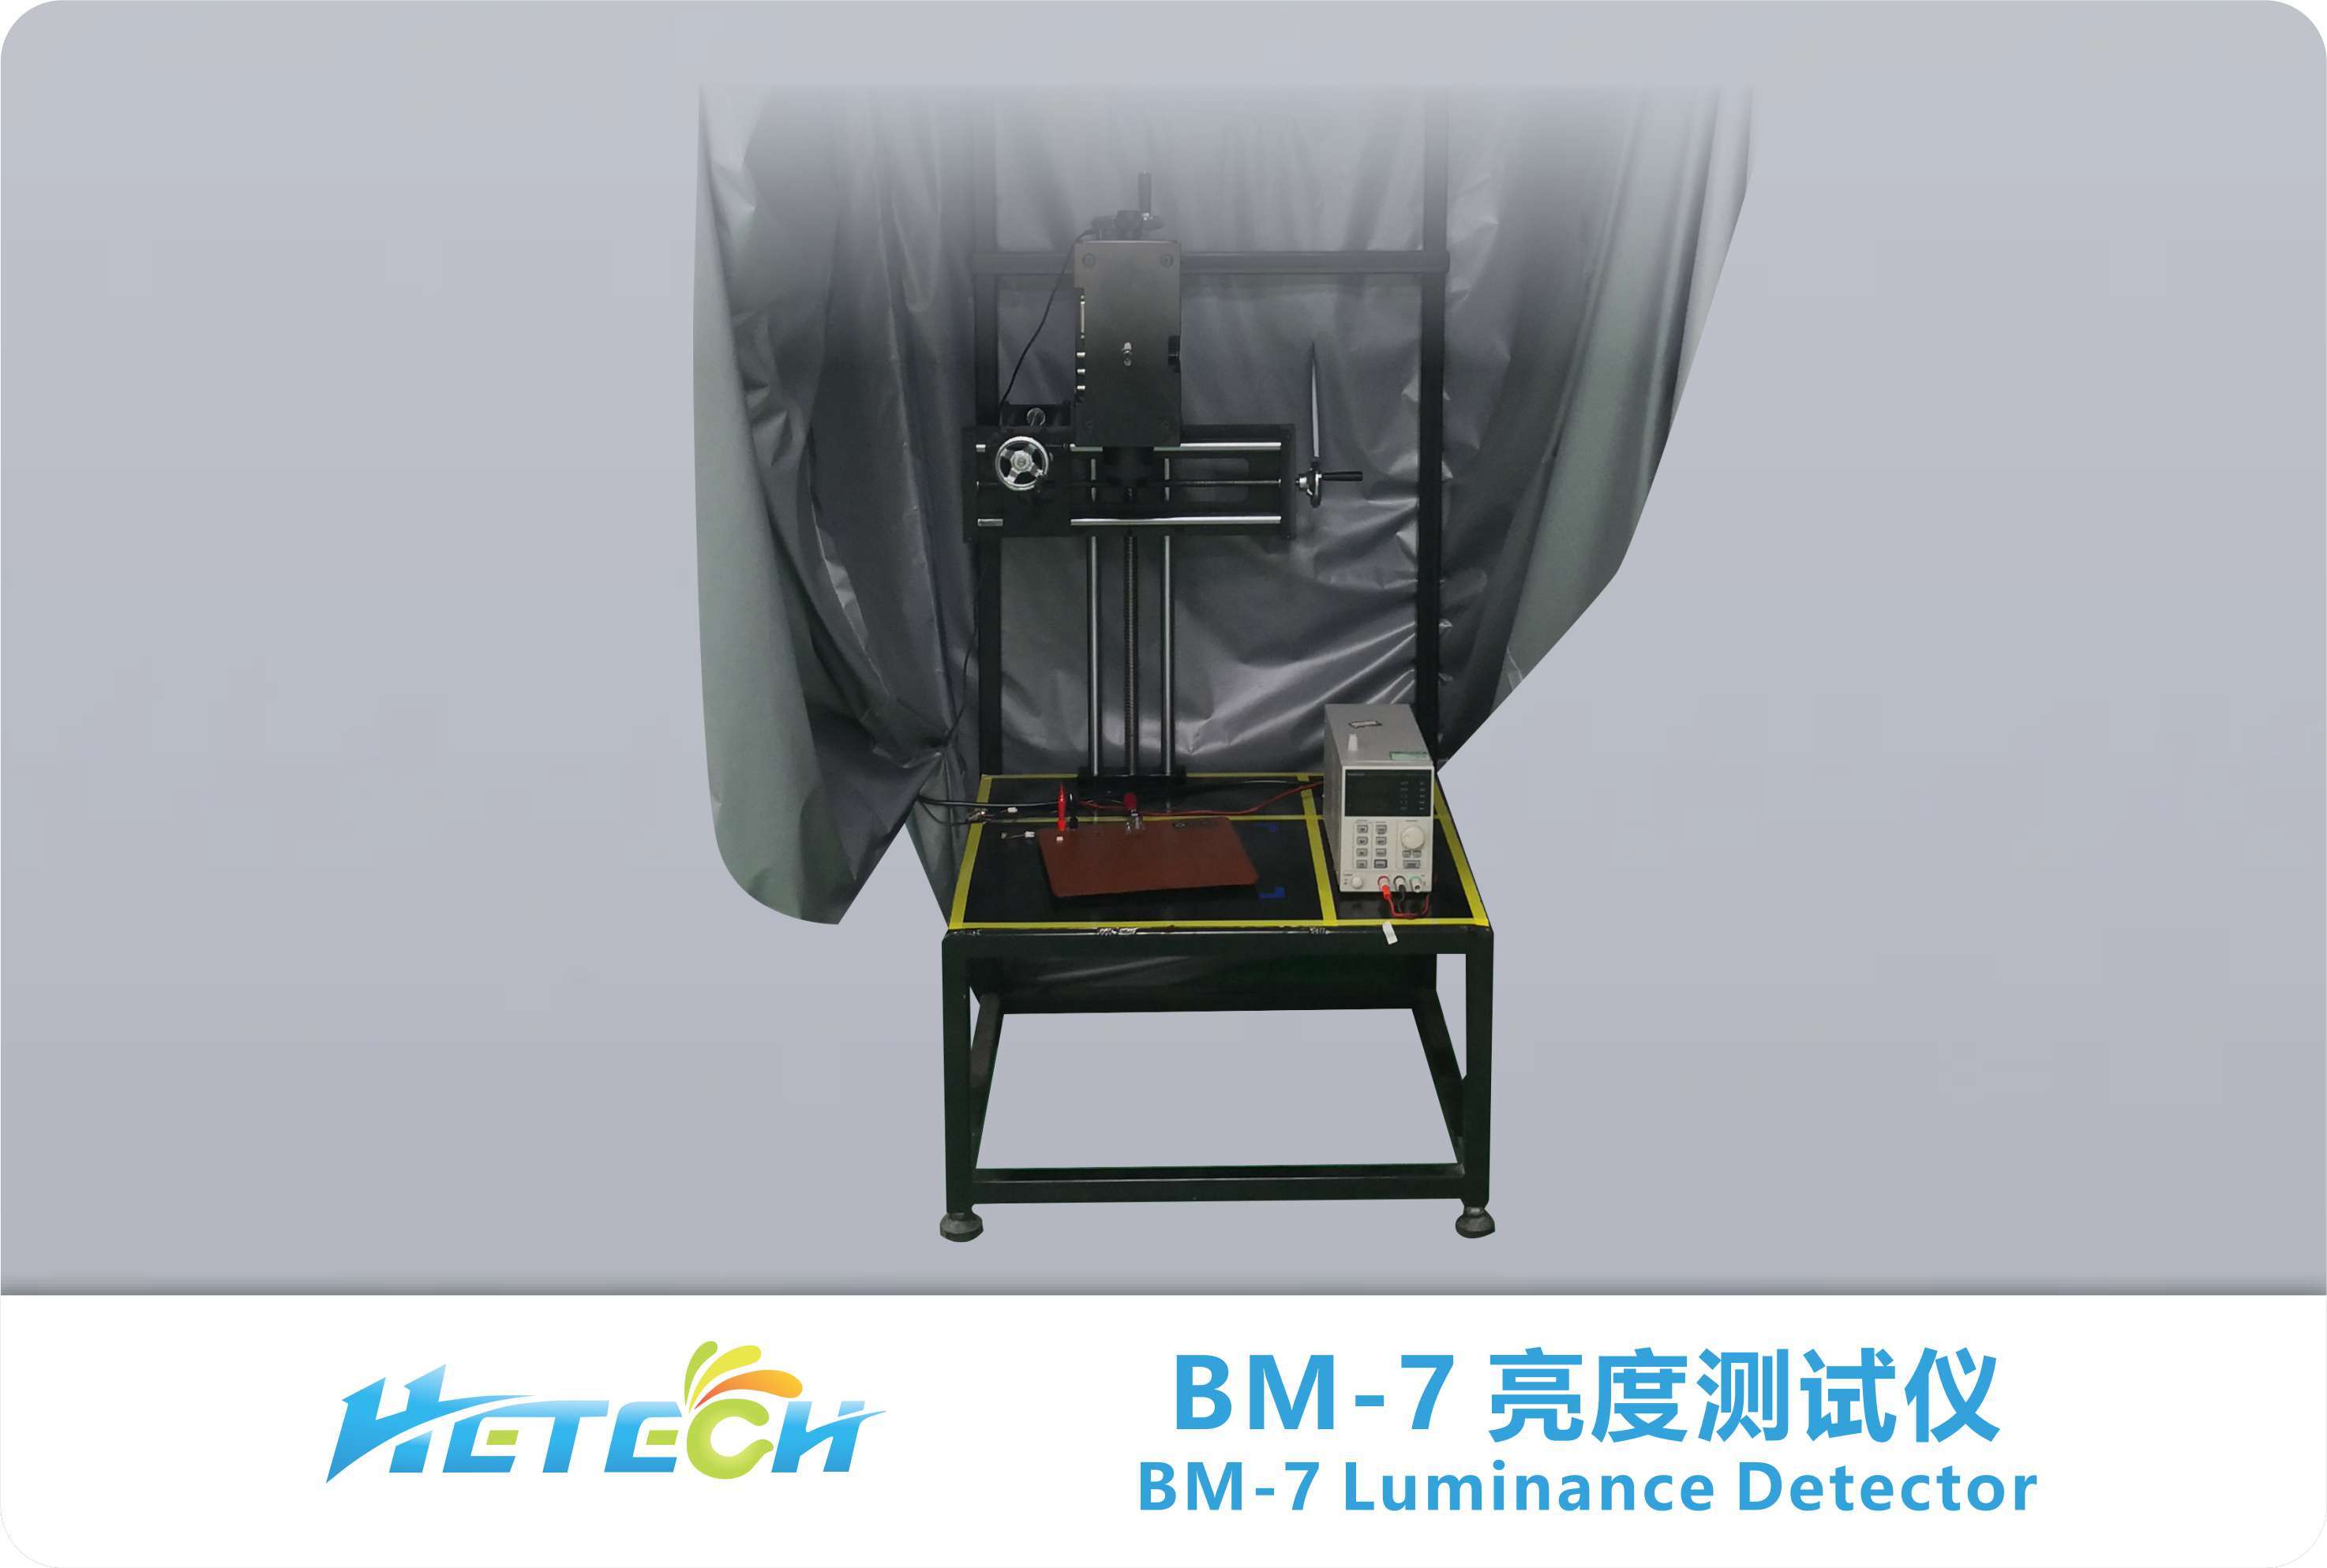 BM-7 Luminance Detector